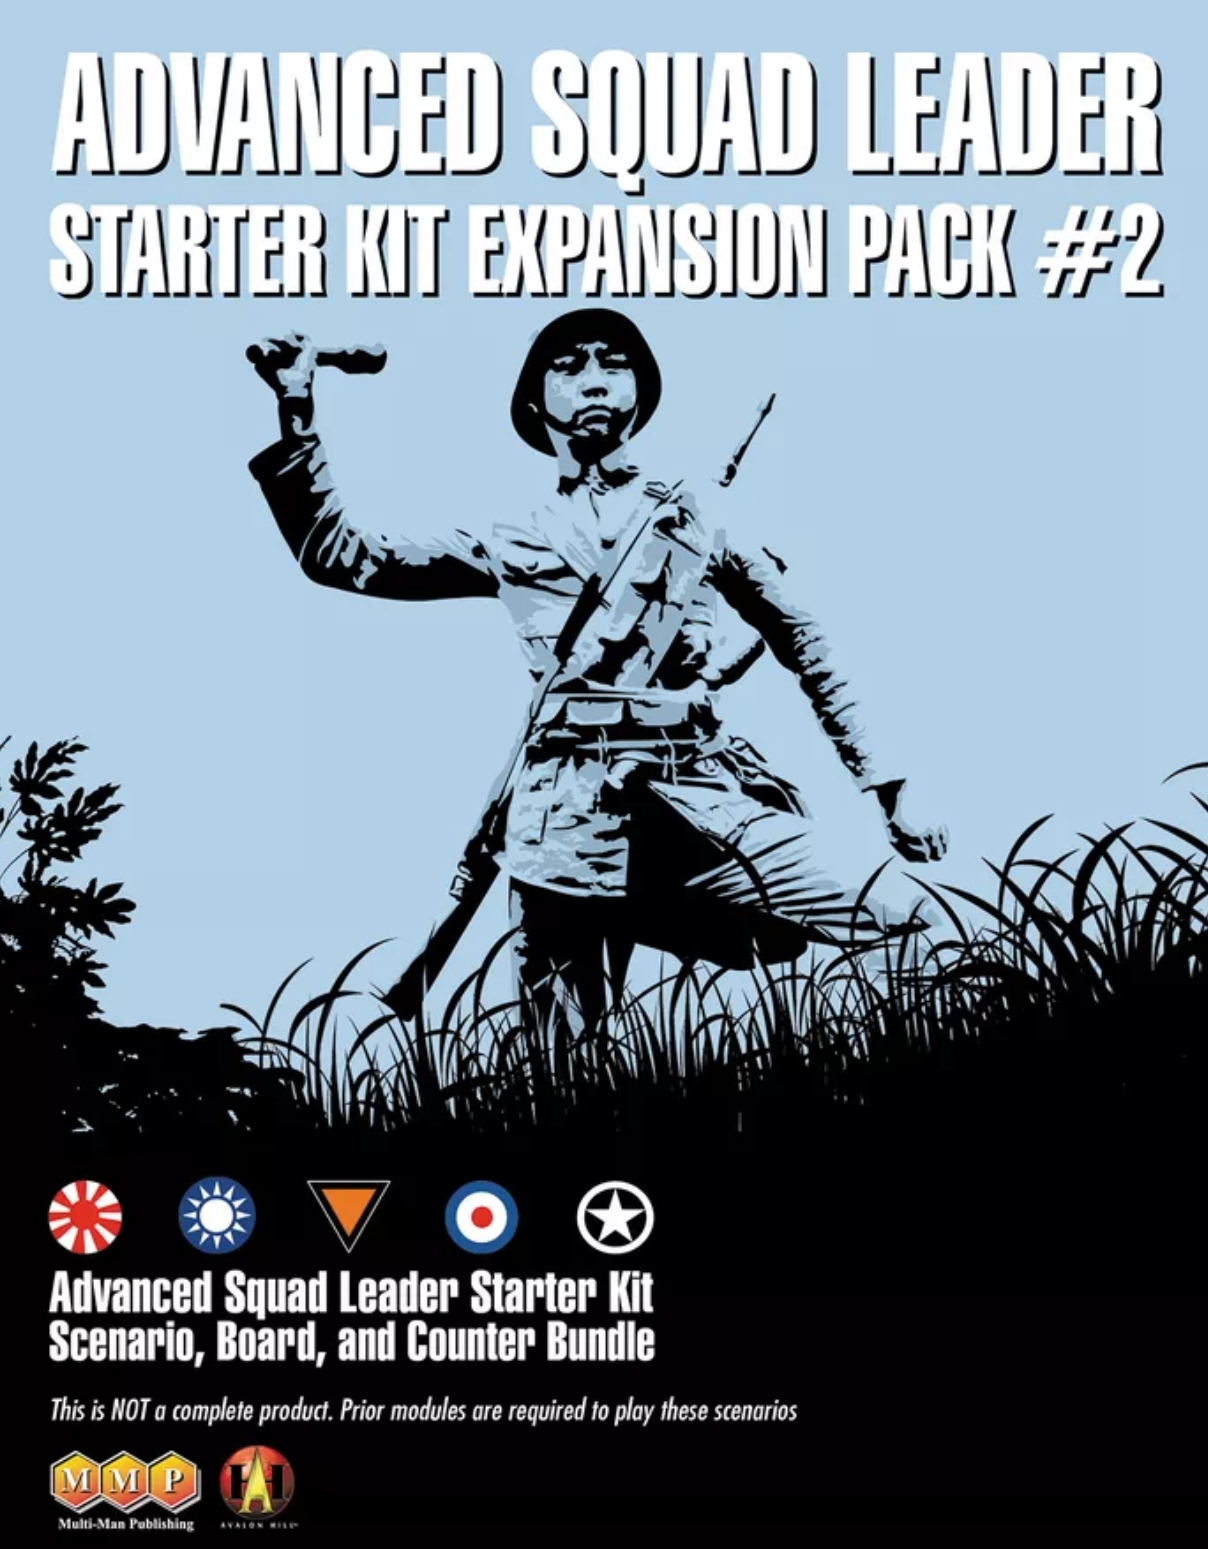 Advanced Squad Leader Starter Kit Expansion Pack #2 — Desperation